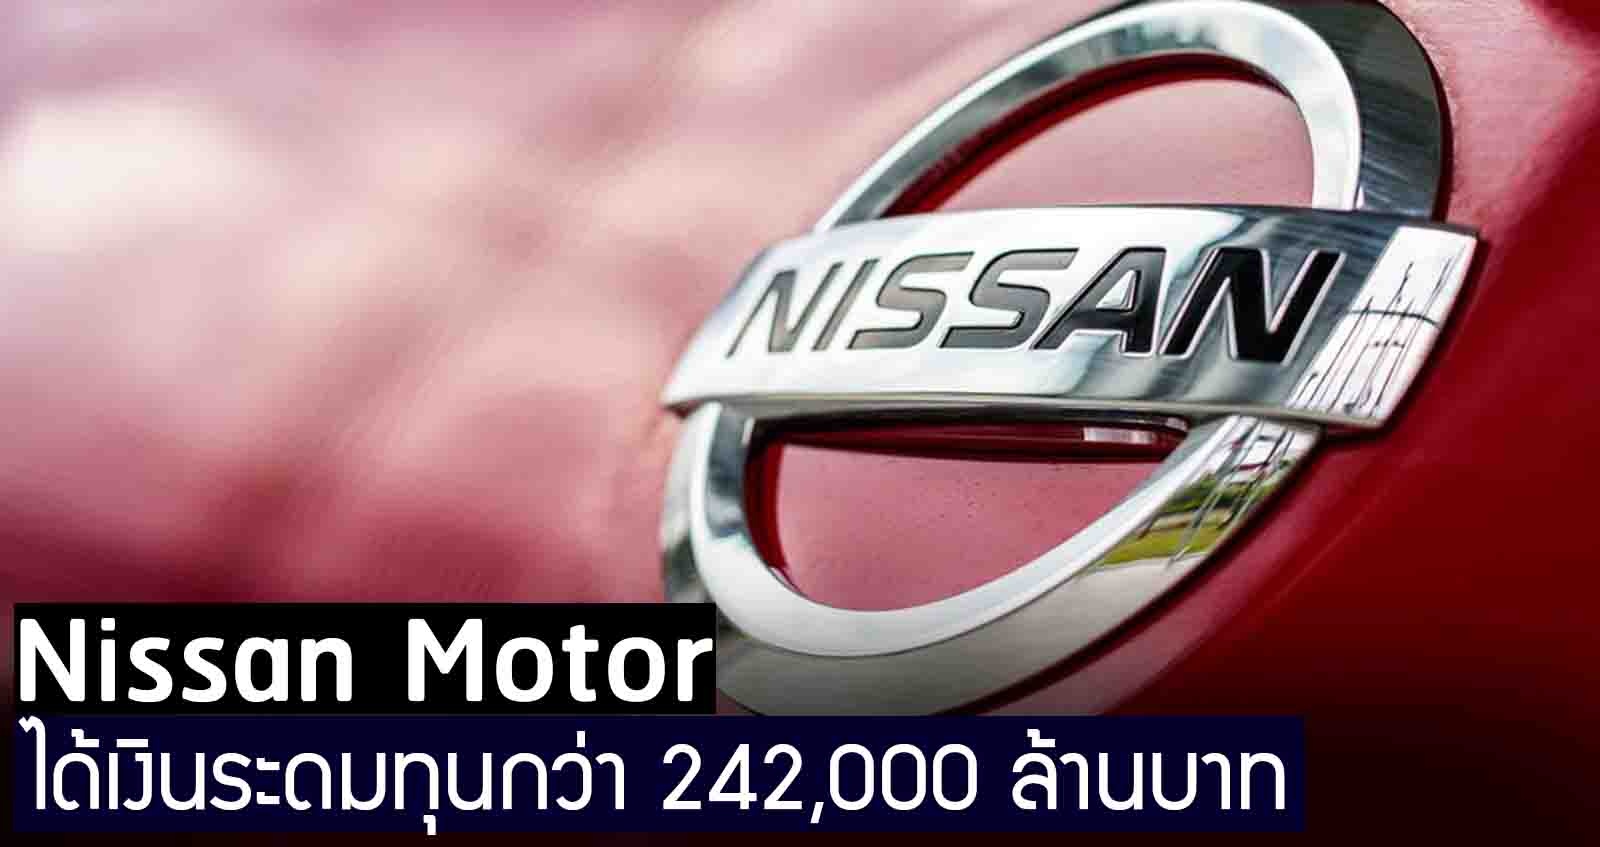 Nissan Motor ระดมทุนกว่า 242,000 ล้านบาท เพื่อผ่านช่วงวิกฤติการเงิน